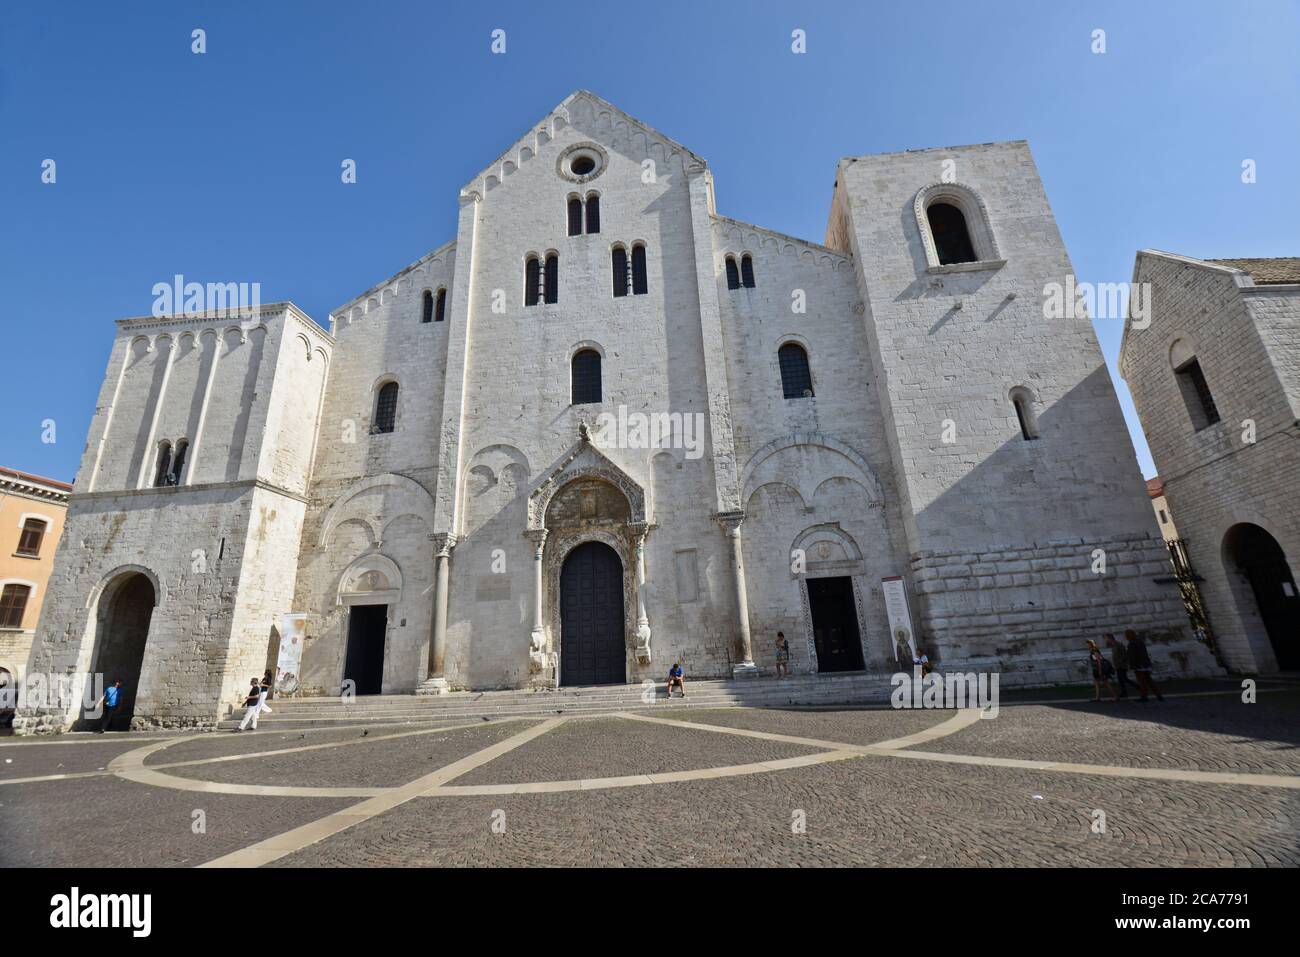 Basilica of Saint Nicholas of Bari (Basilica di San Nicola). Italy Stock Photo